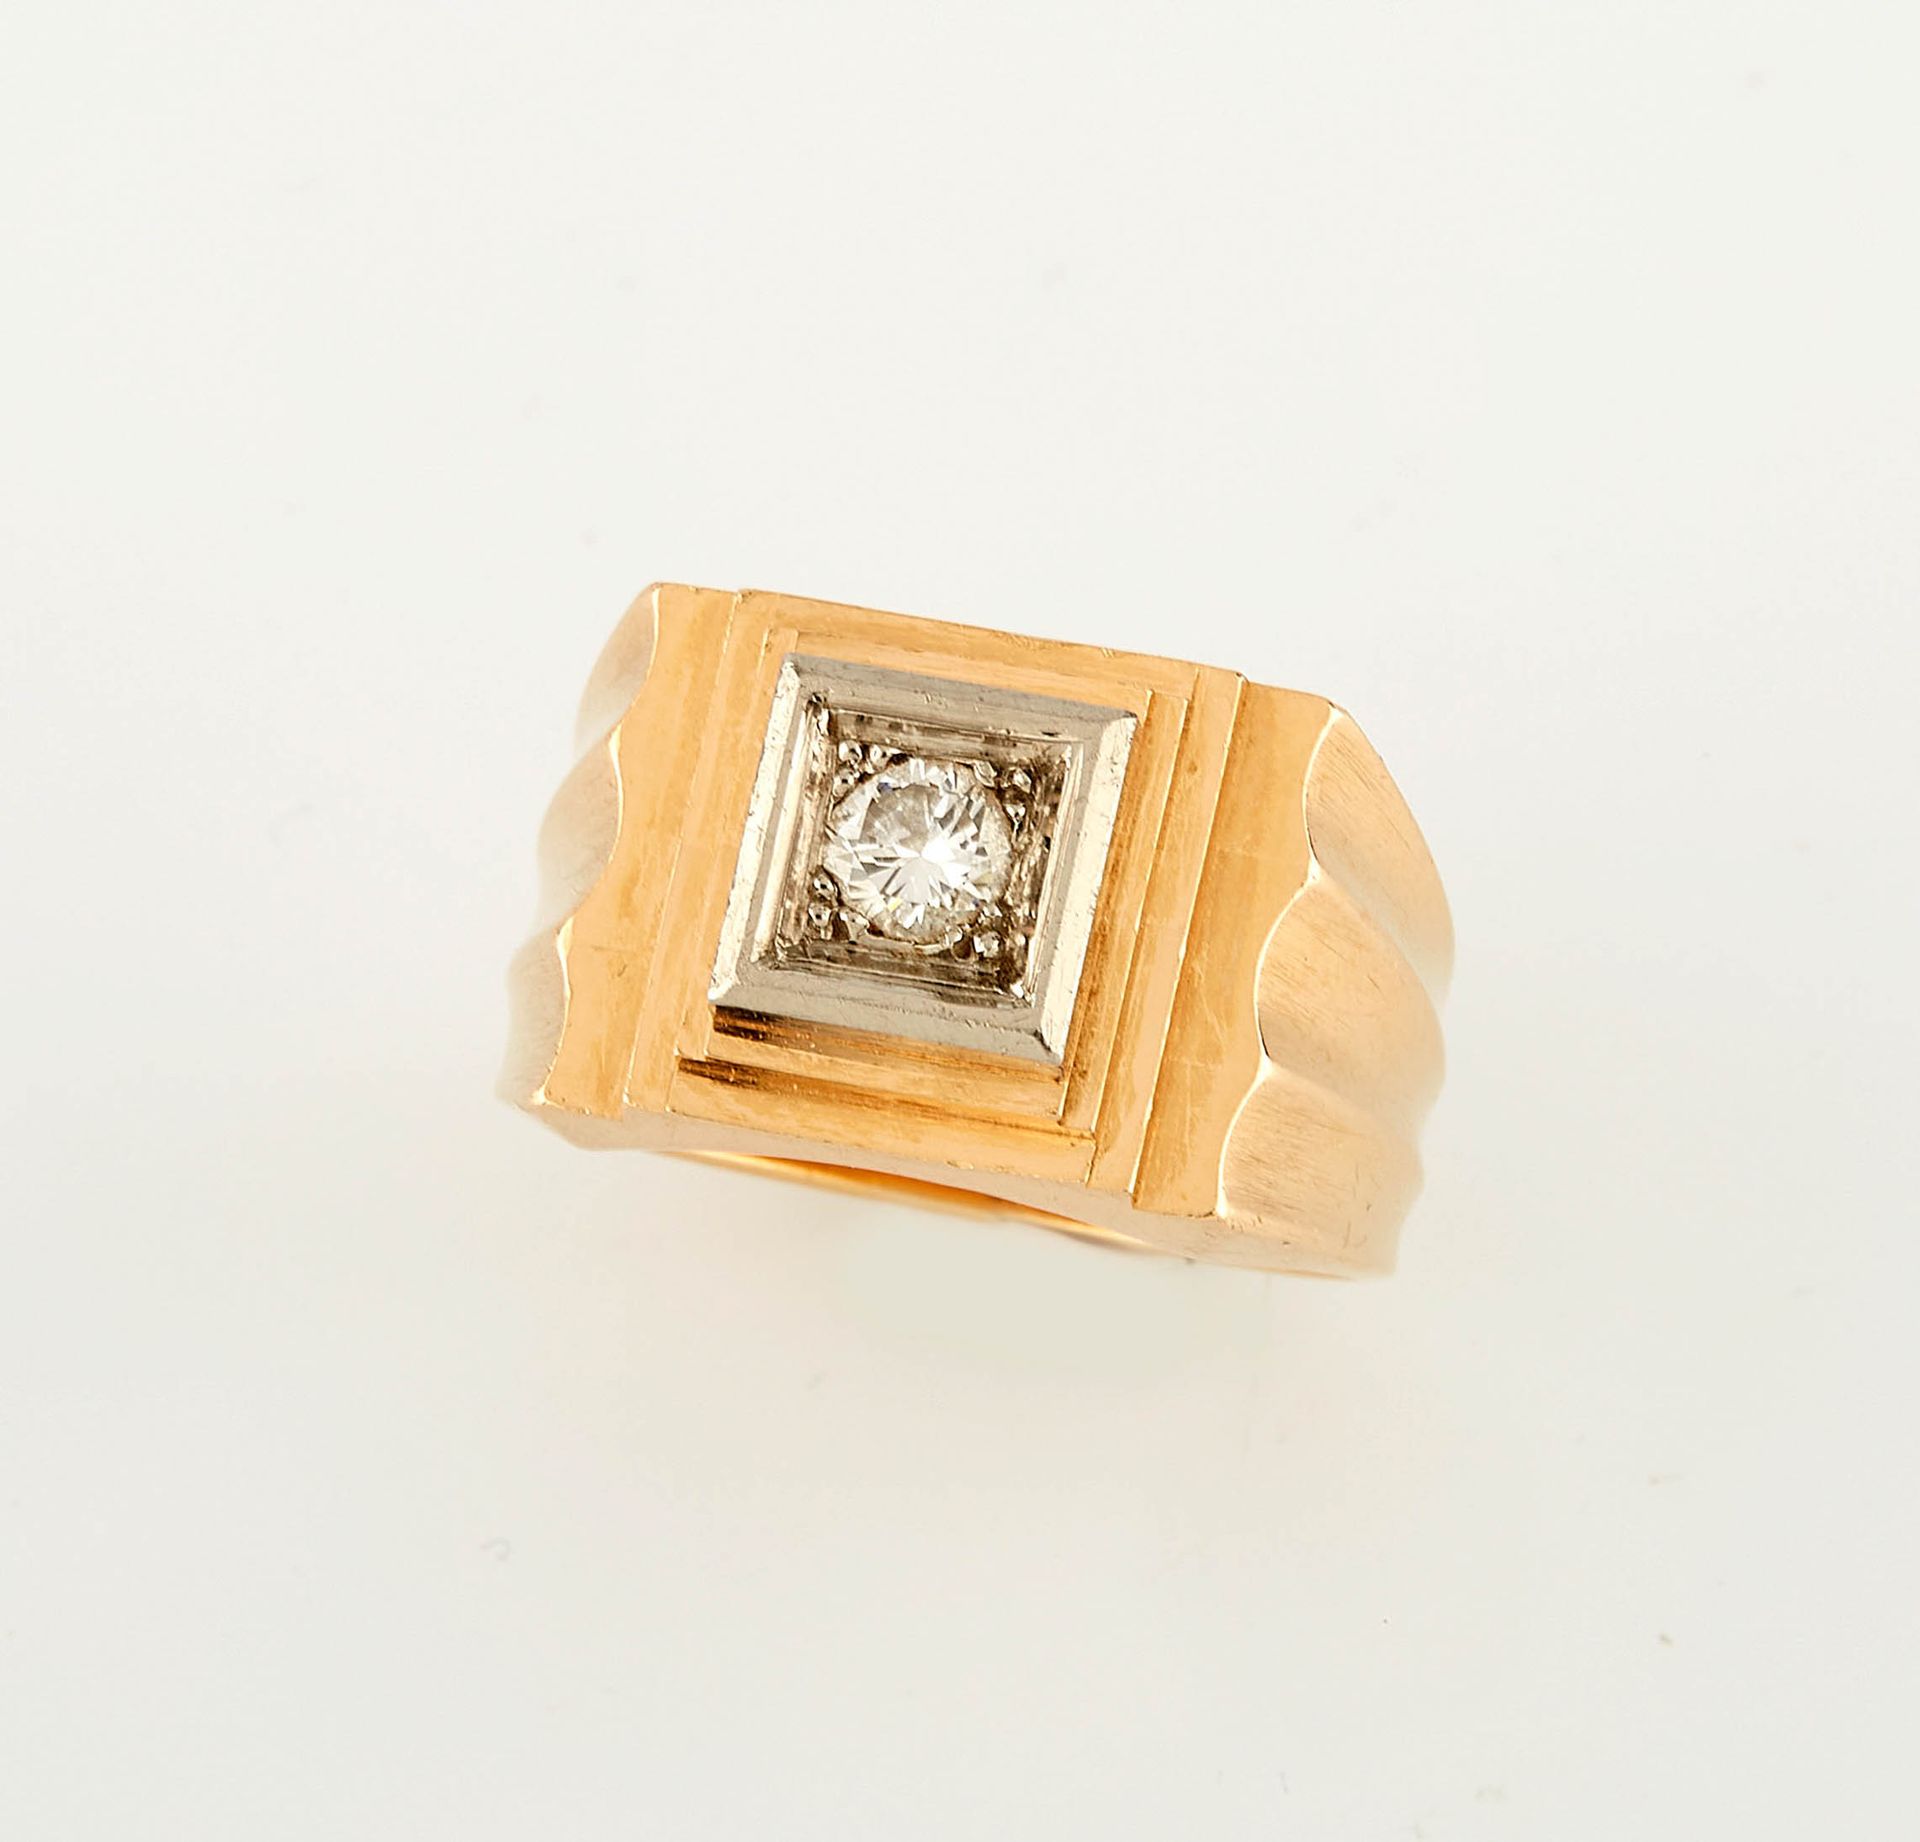 Null 黄金戒指，中央镶嵌一颗明亮型切割钻石，约0.20克拉。 手指尺寸：60.5。重量：17.35克。